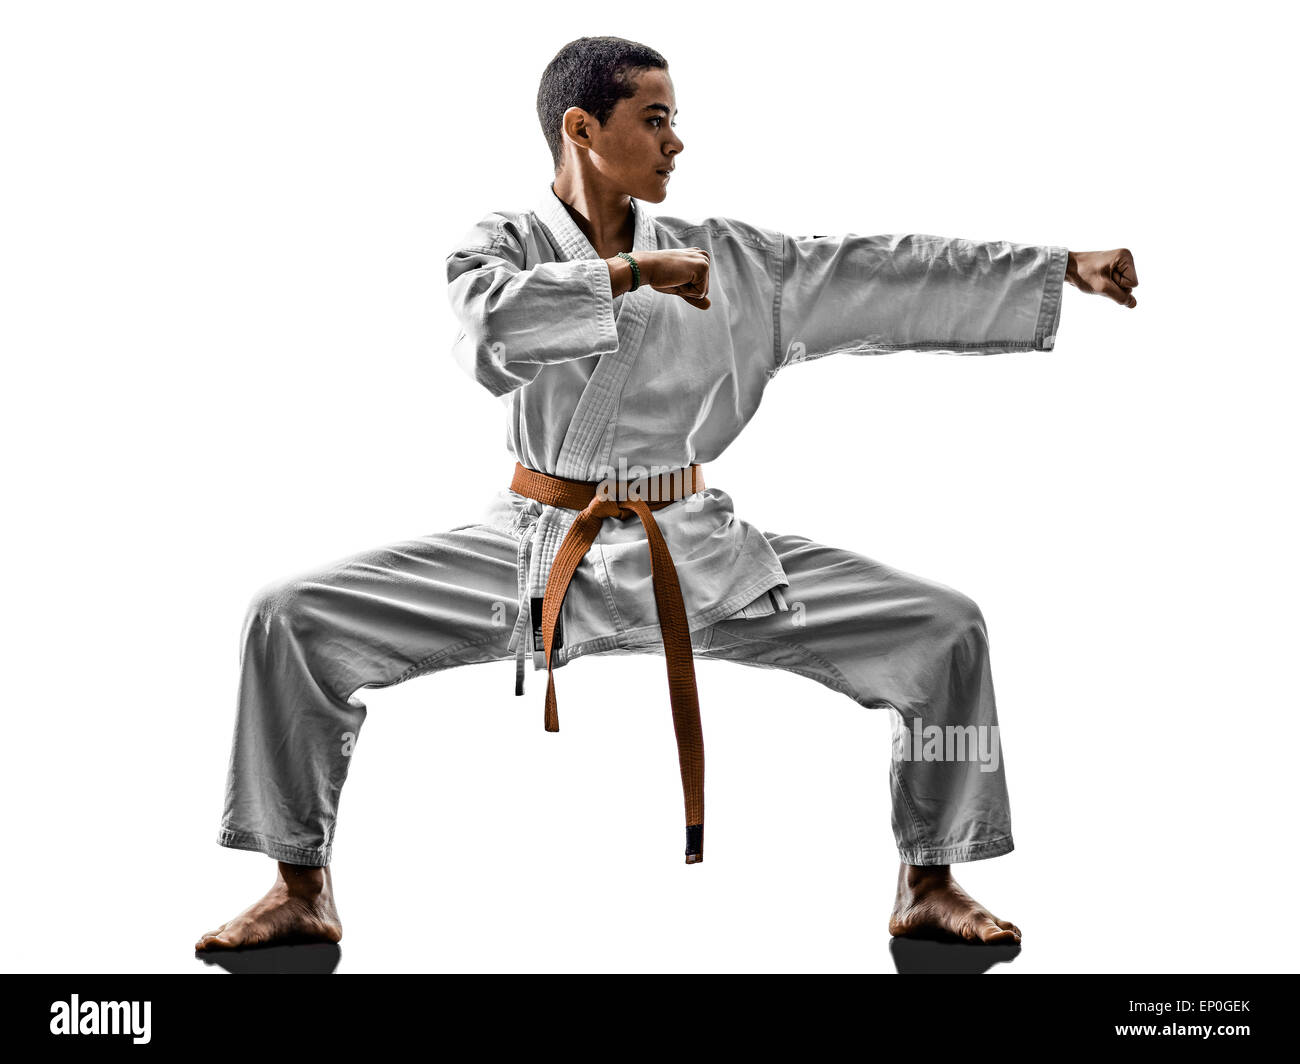 one karate kata training teenagers kid isolated on white background Stock Photo